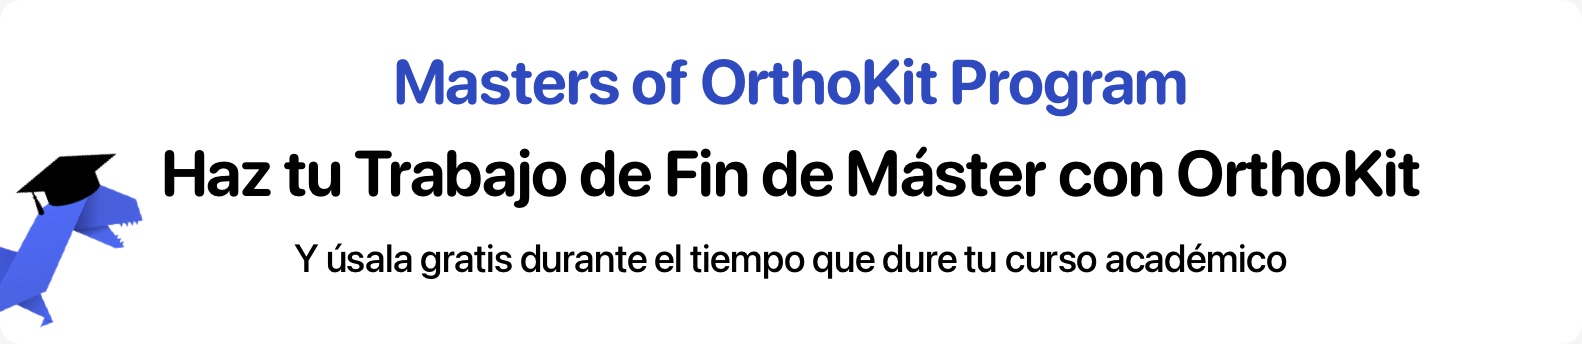 OrthoKit para Estudiantes - Masters of OrthoKit Program